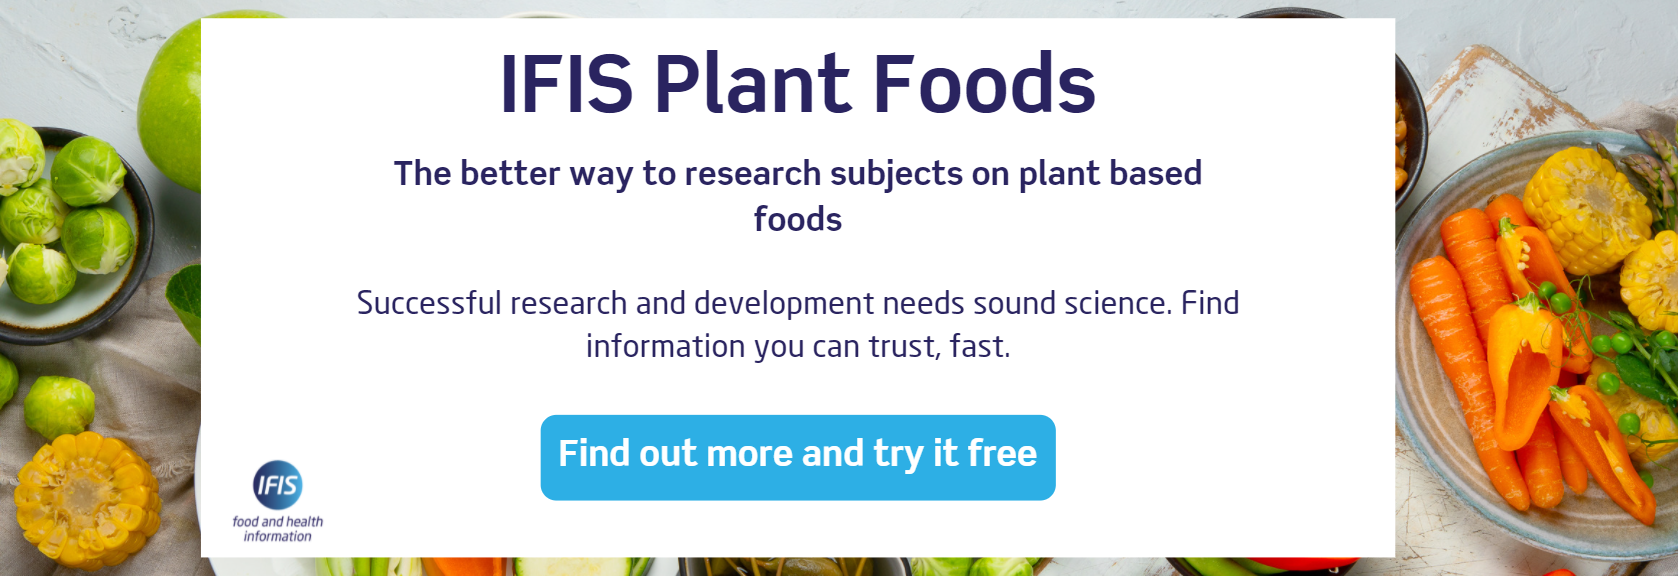 IFIS Plant Foods CTA-4